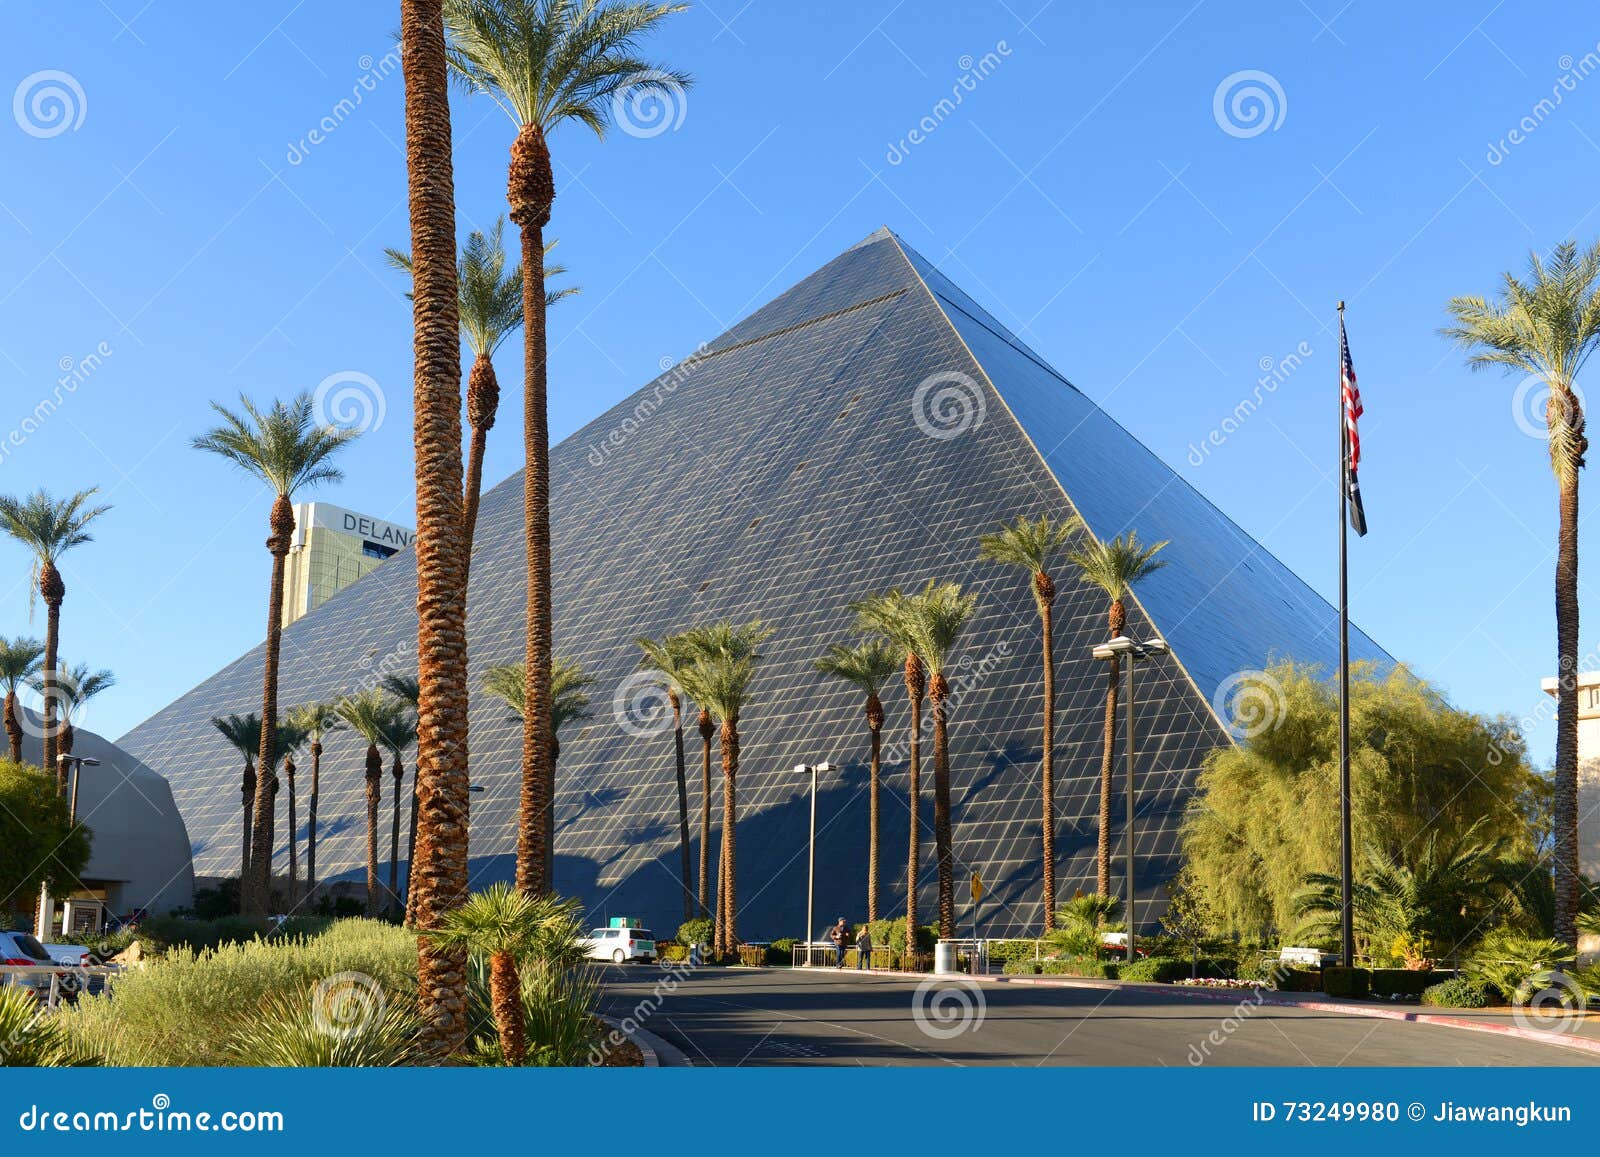 Centro Turistico Y Casino Las Vegas Nanovoltio De Luxor Imagen